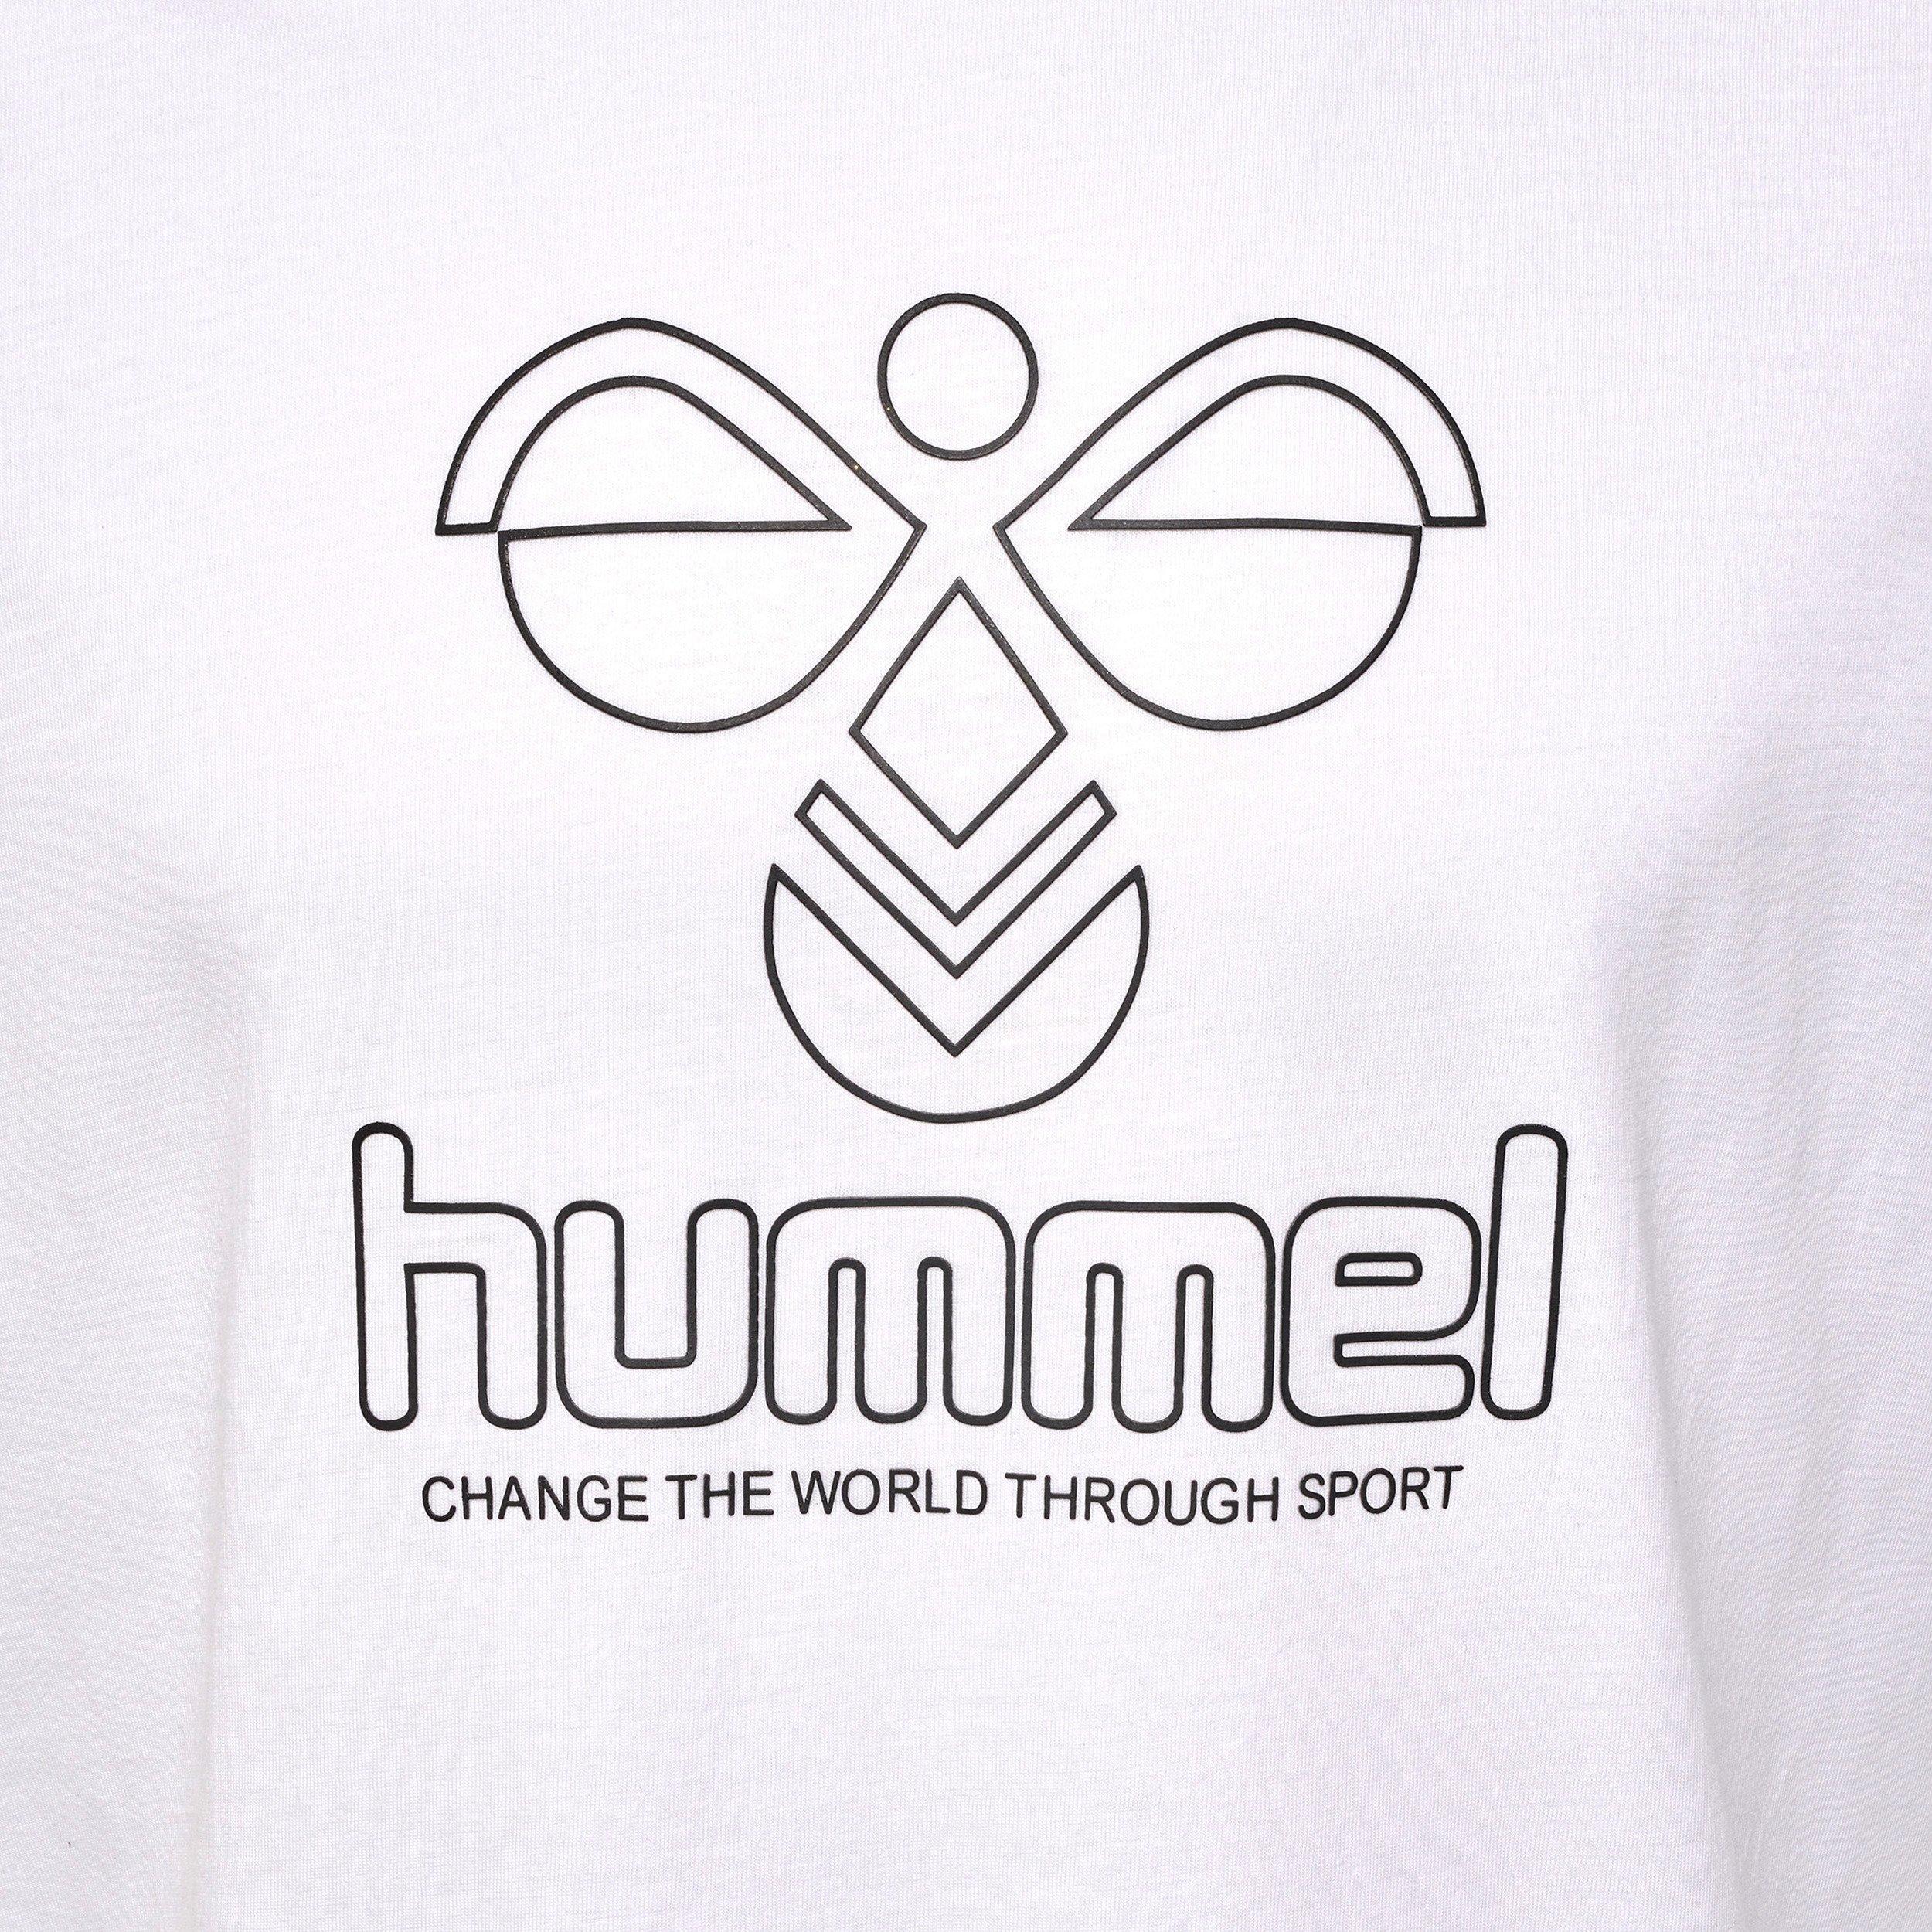 Hummel  T-Shirt Icons 